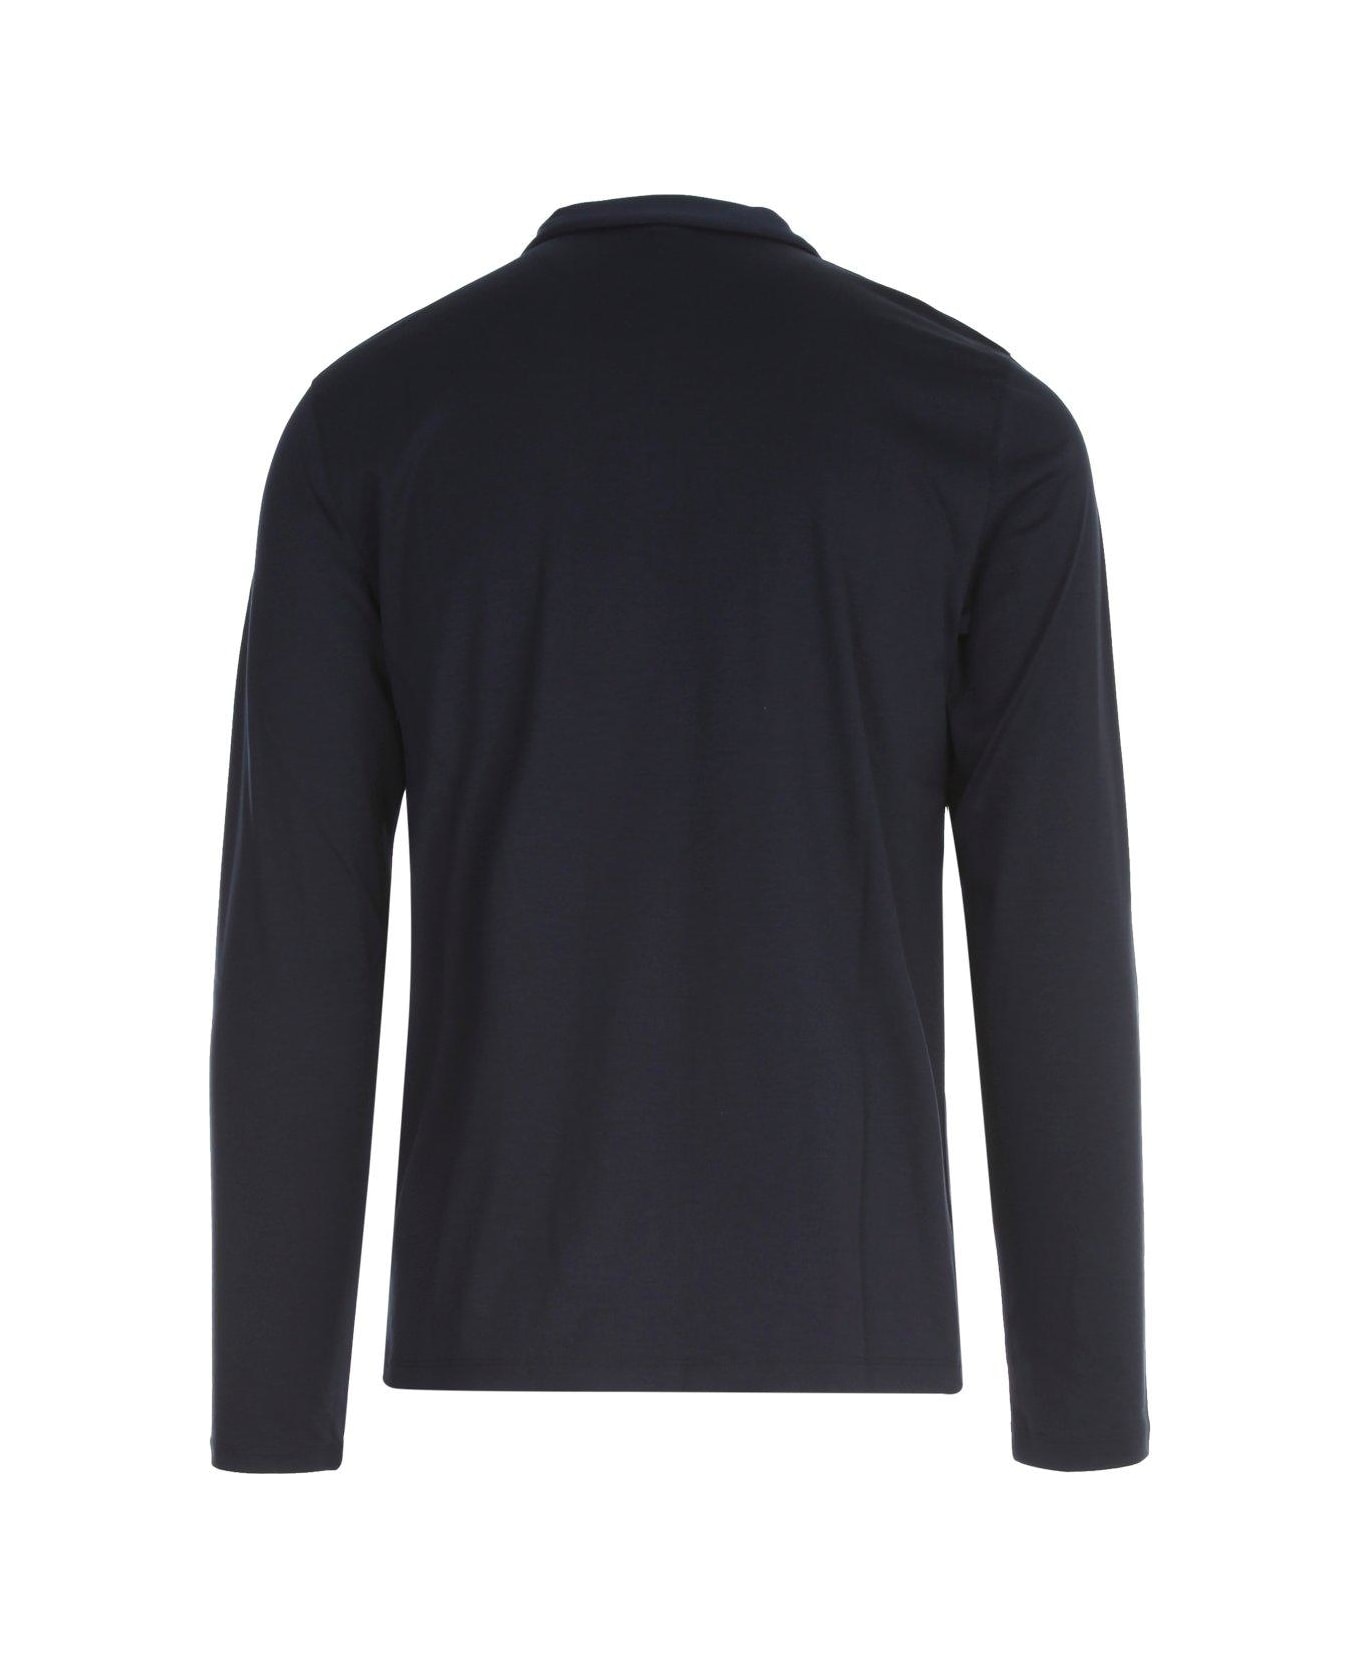 Michael Kors Long Sleeve Sleek Polo Shirt - Midnight シャツ